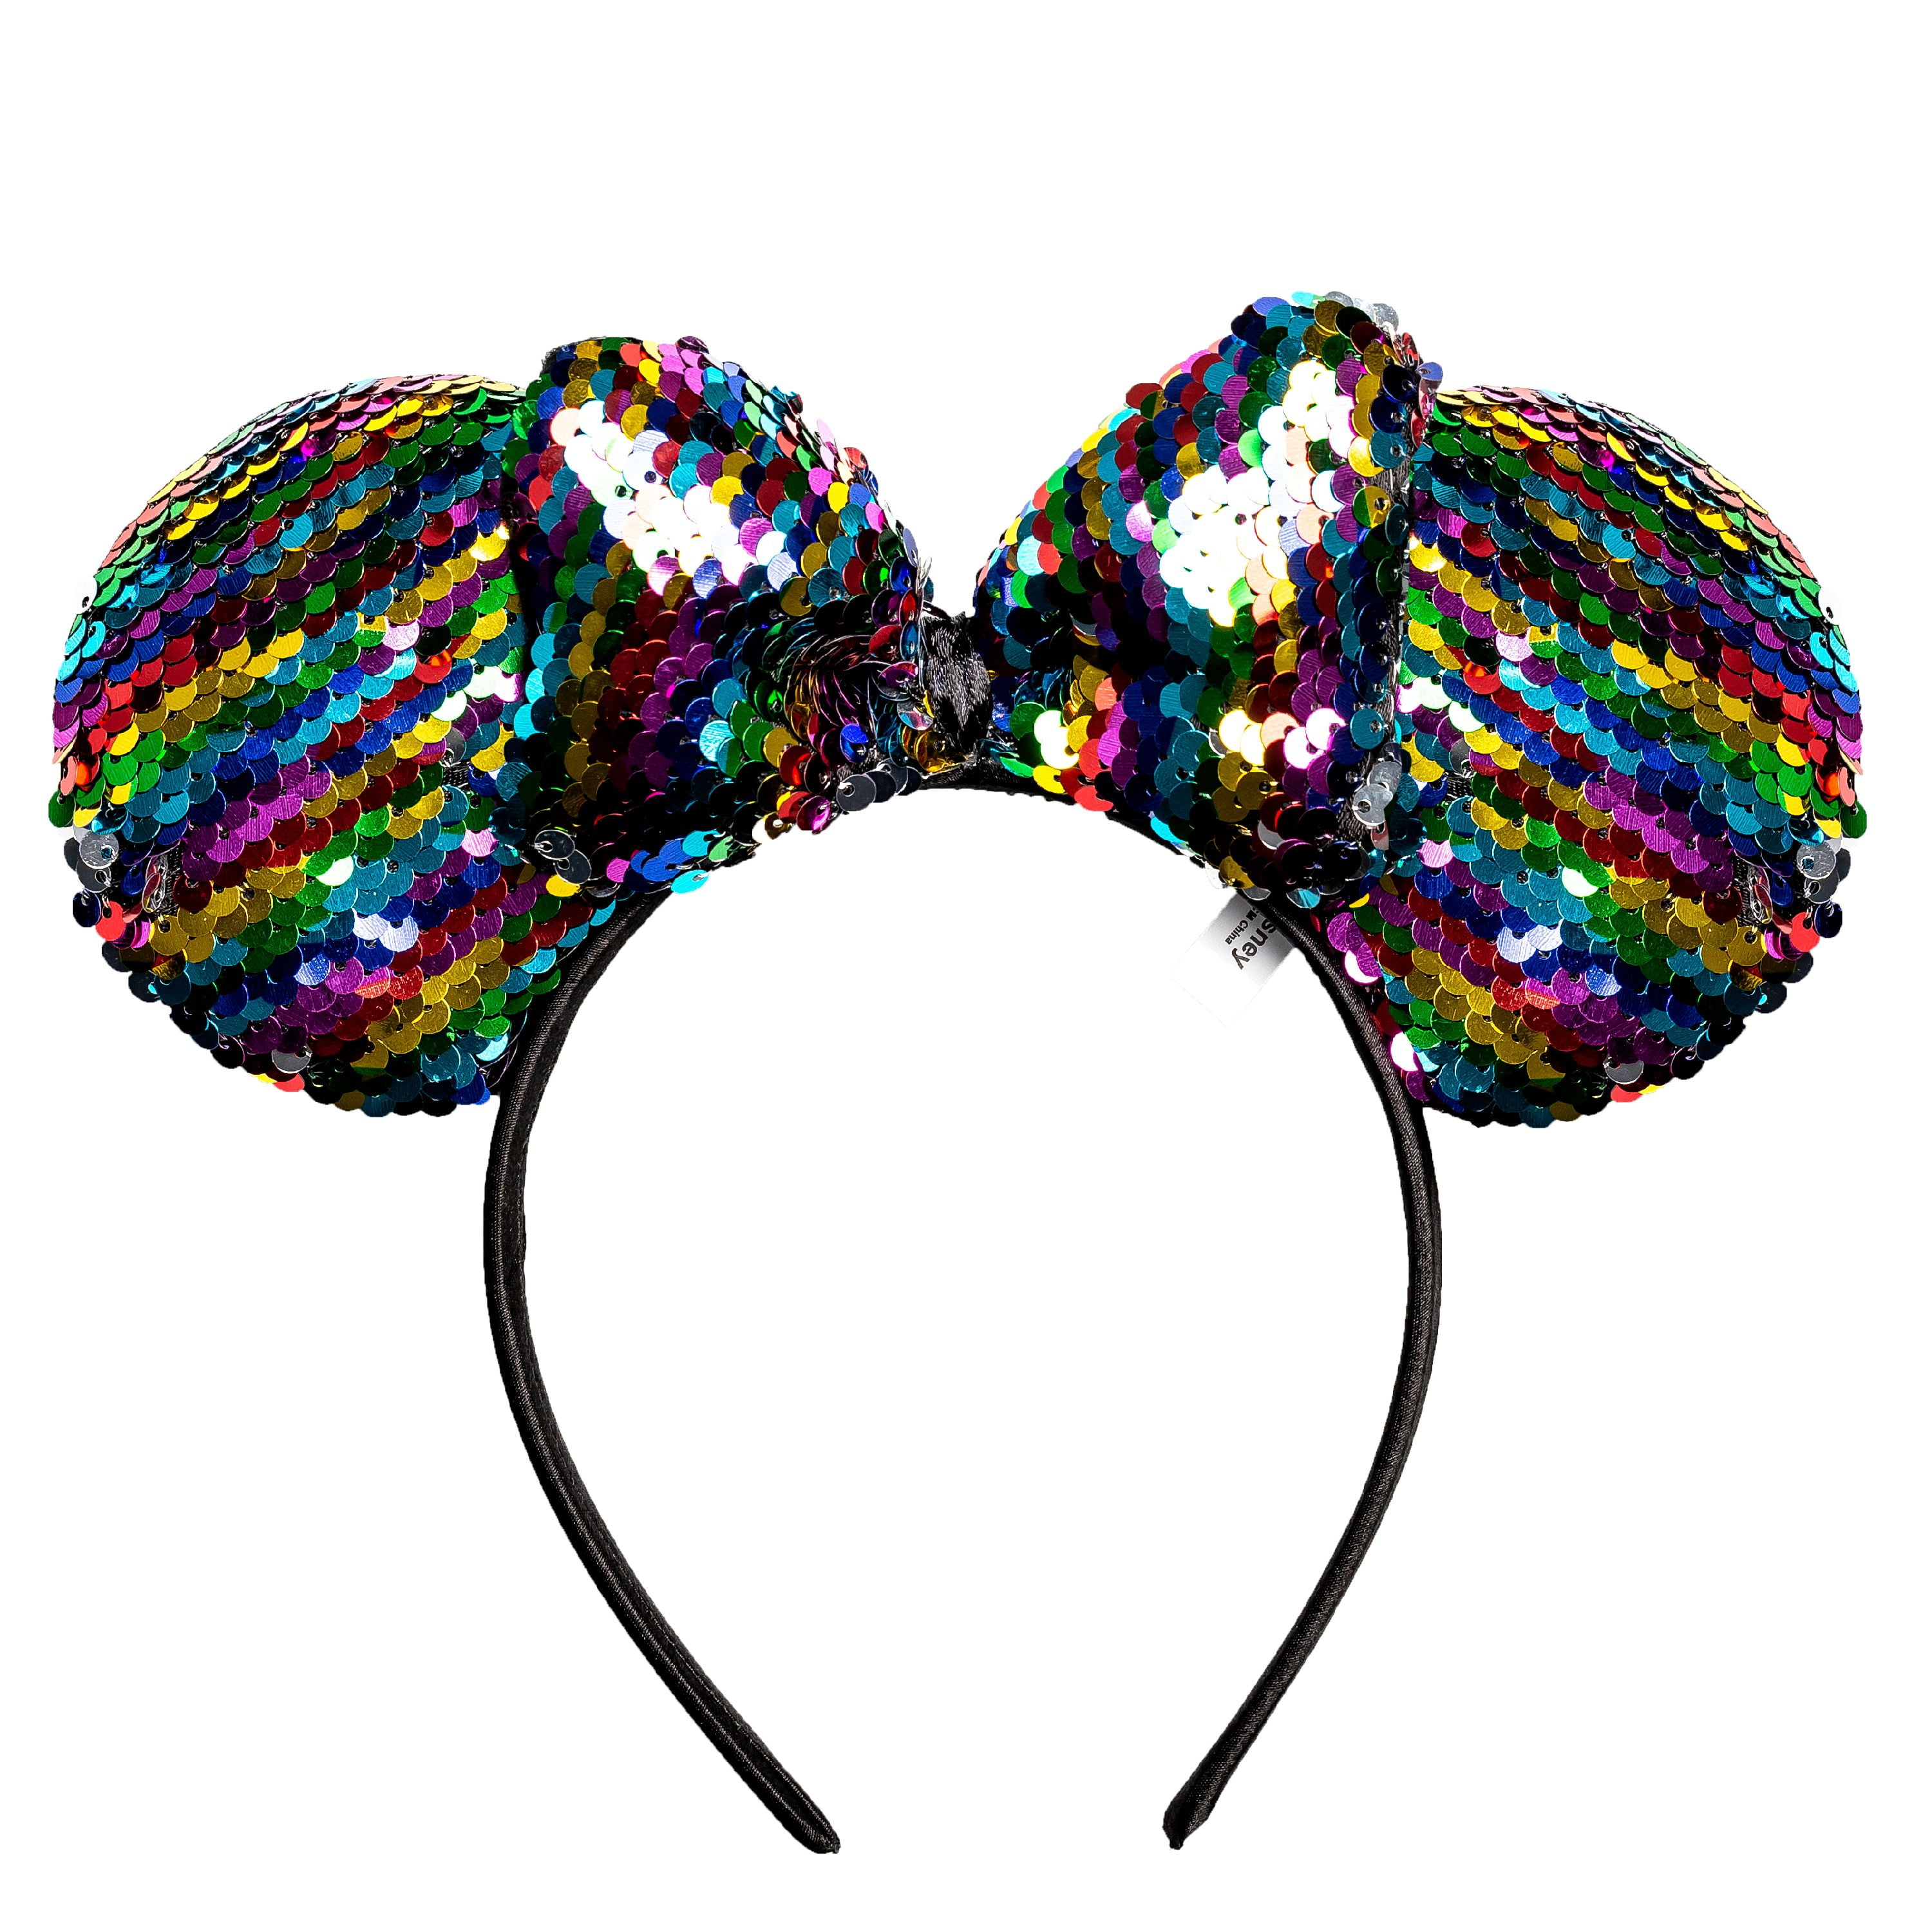 Minnie Mickey Mouse Ears Headbands 24 pc Shiny GOLD Birthday Party Costume DIY 